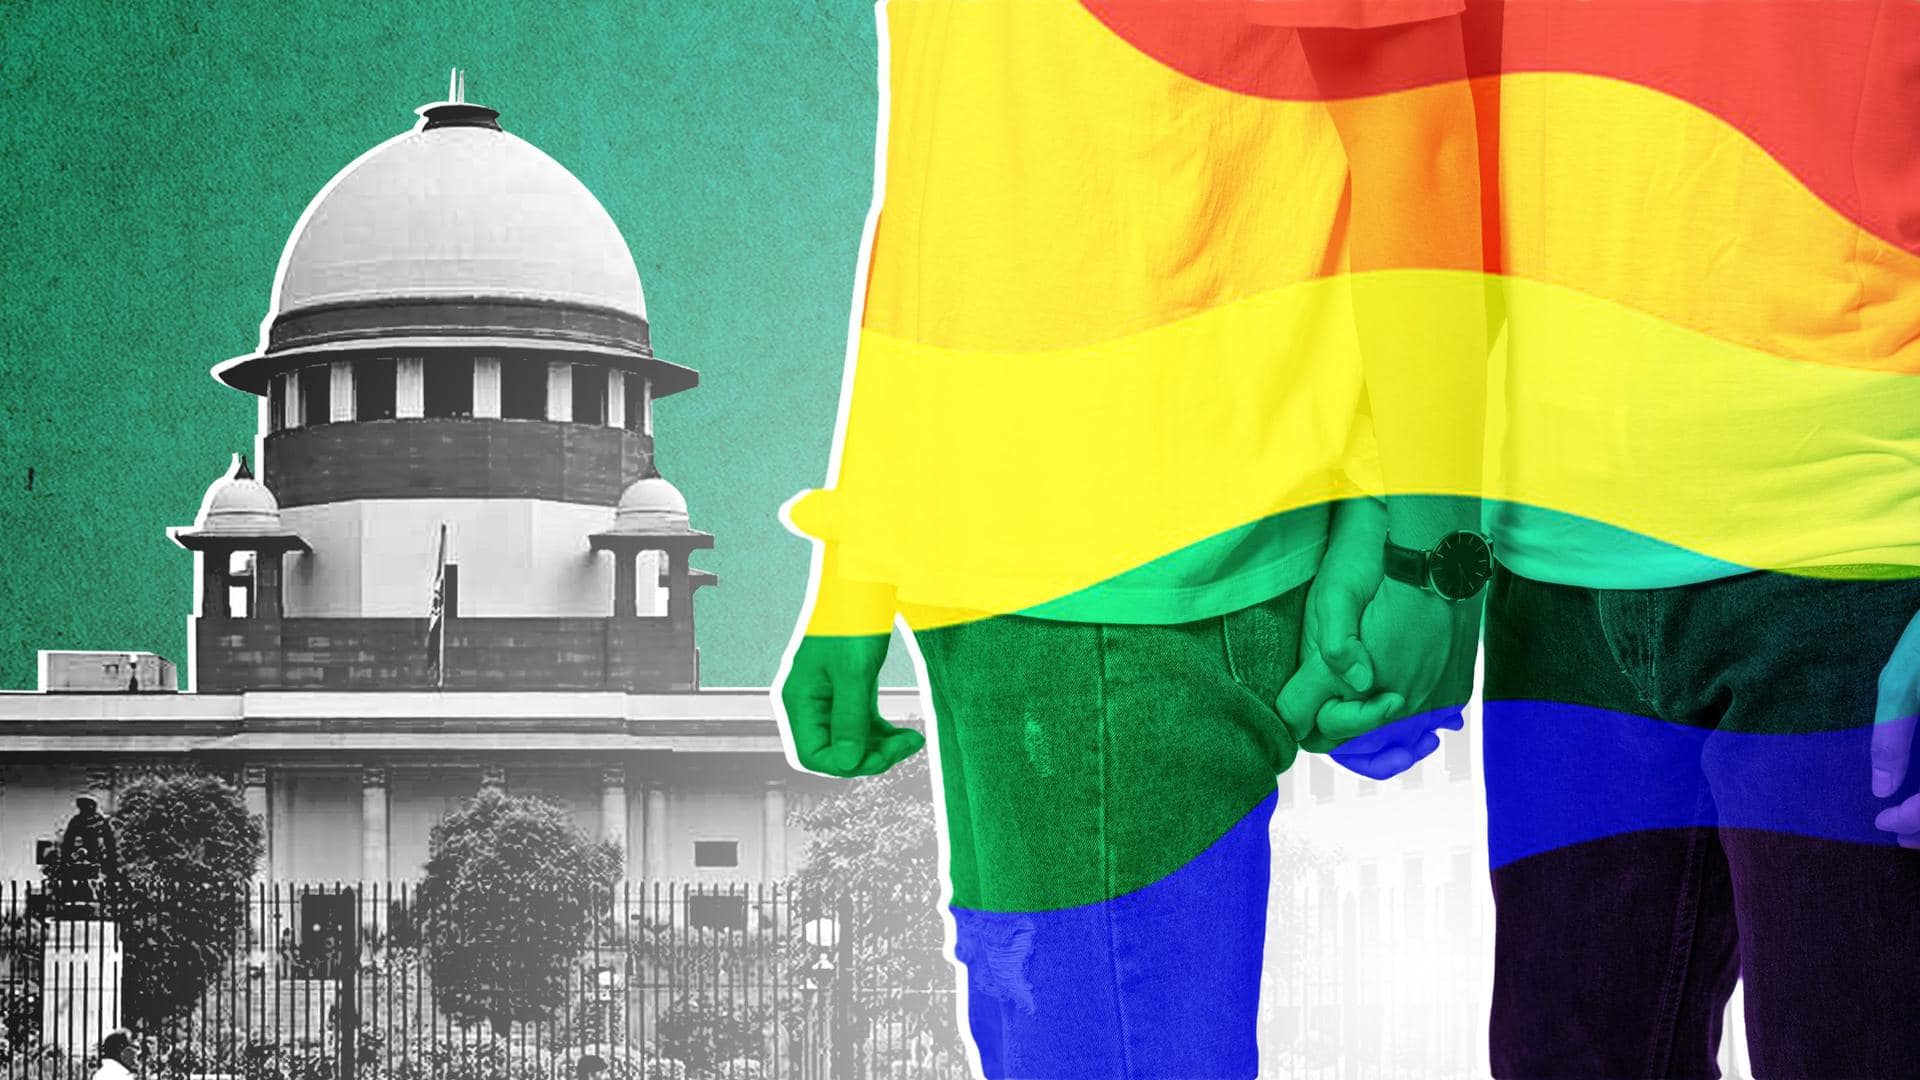 Same-sex marriage 'urban elitist' concept, judiciary can't legalize it: Centre